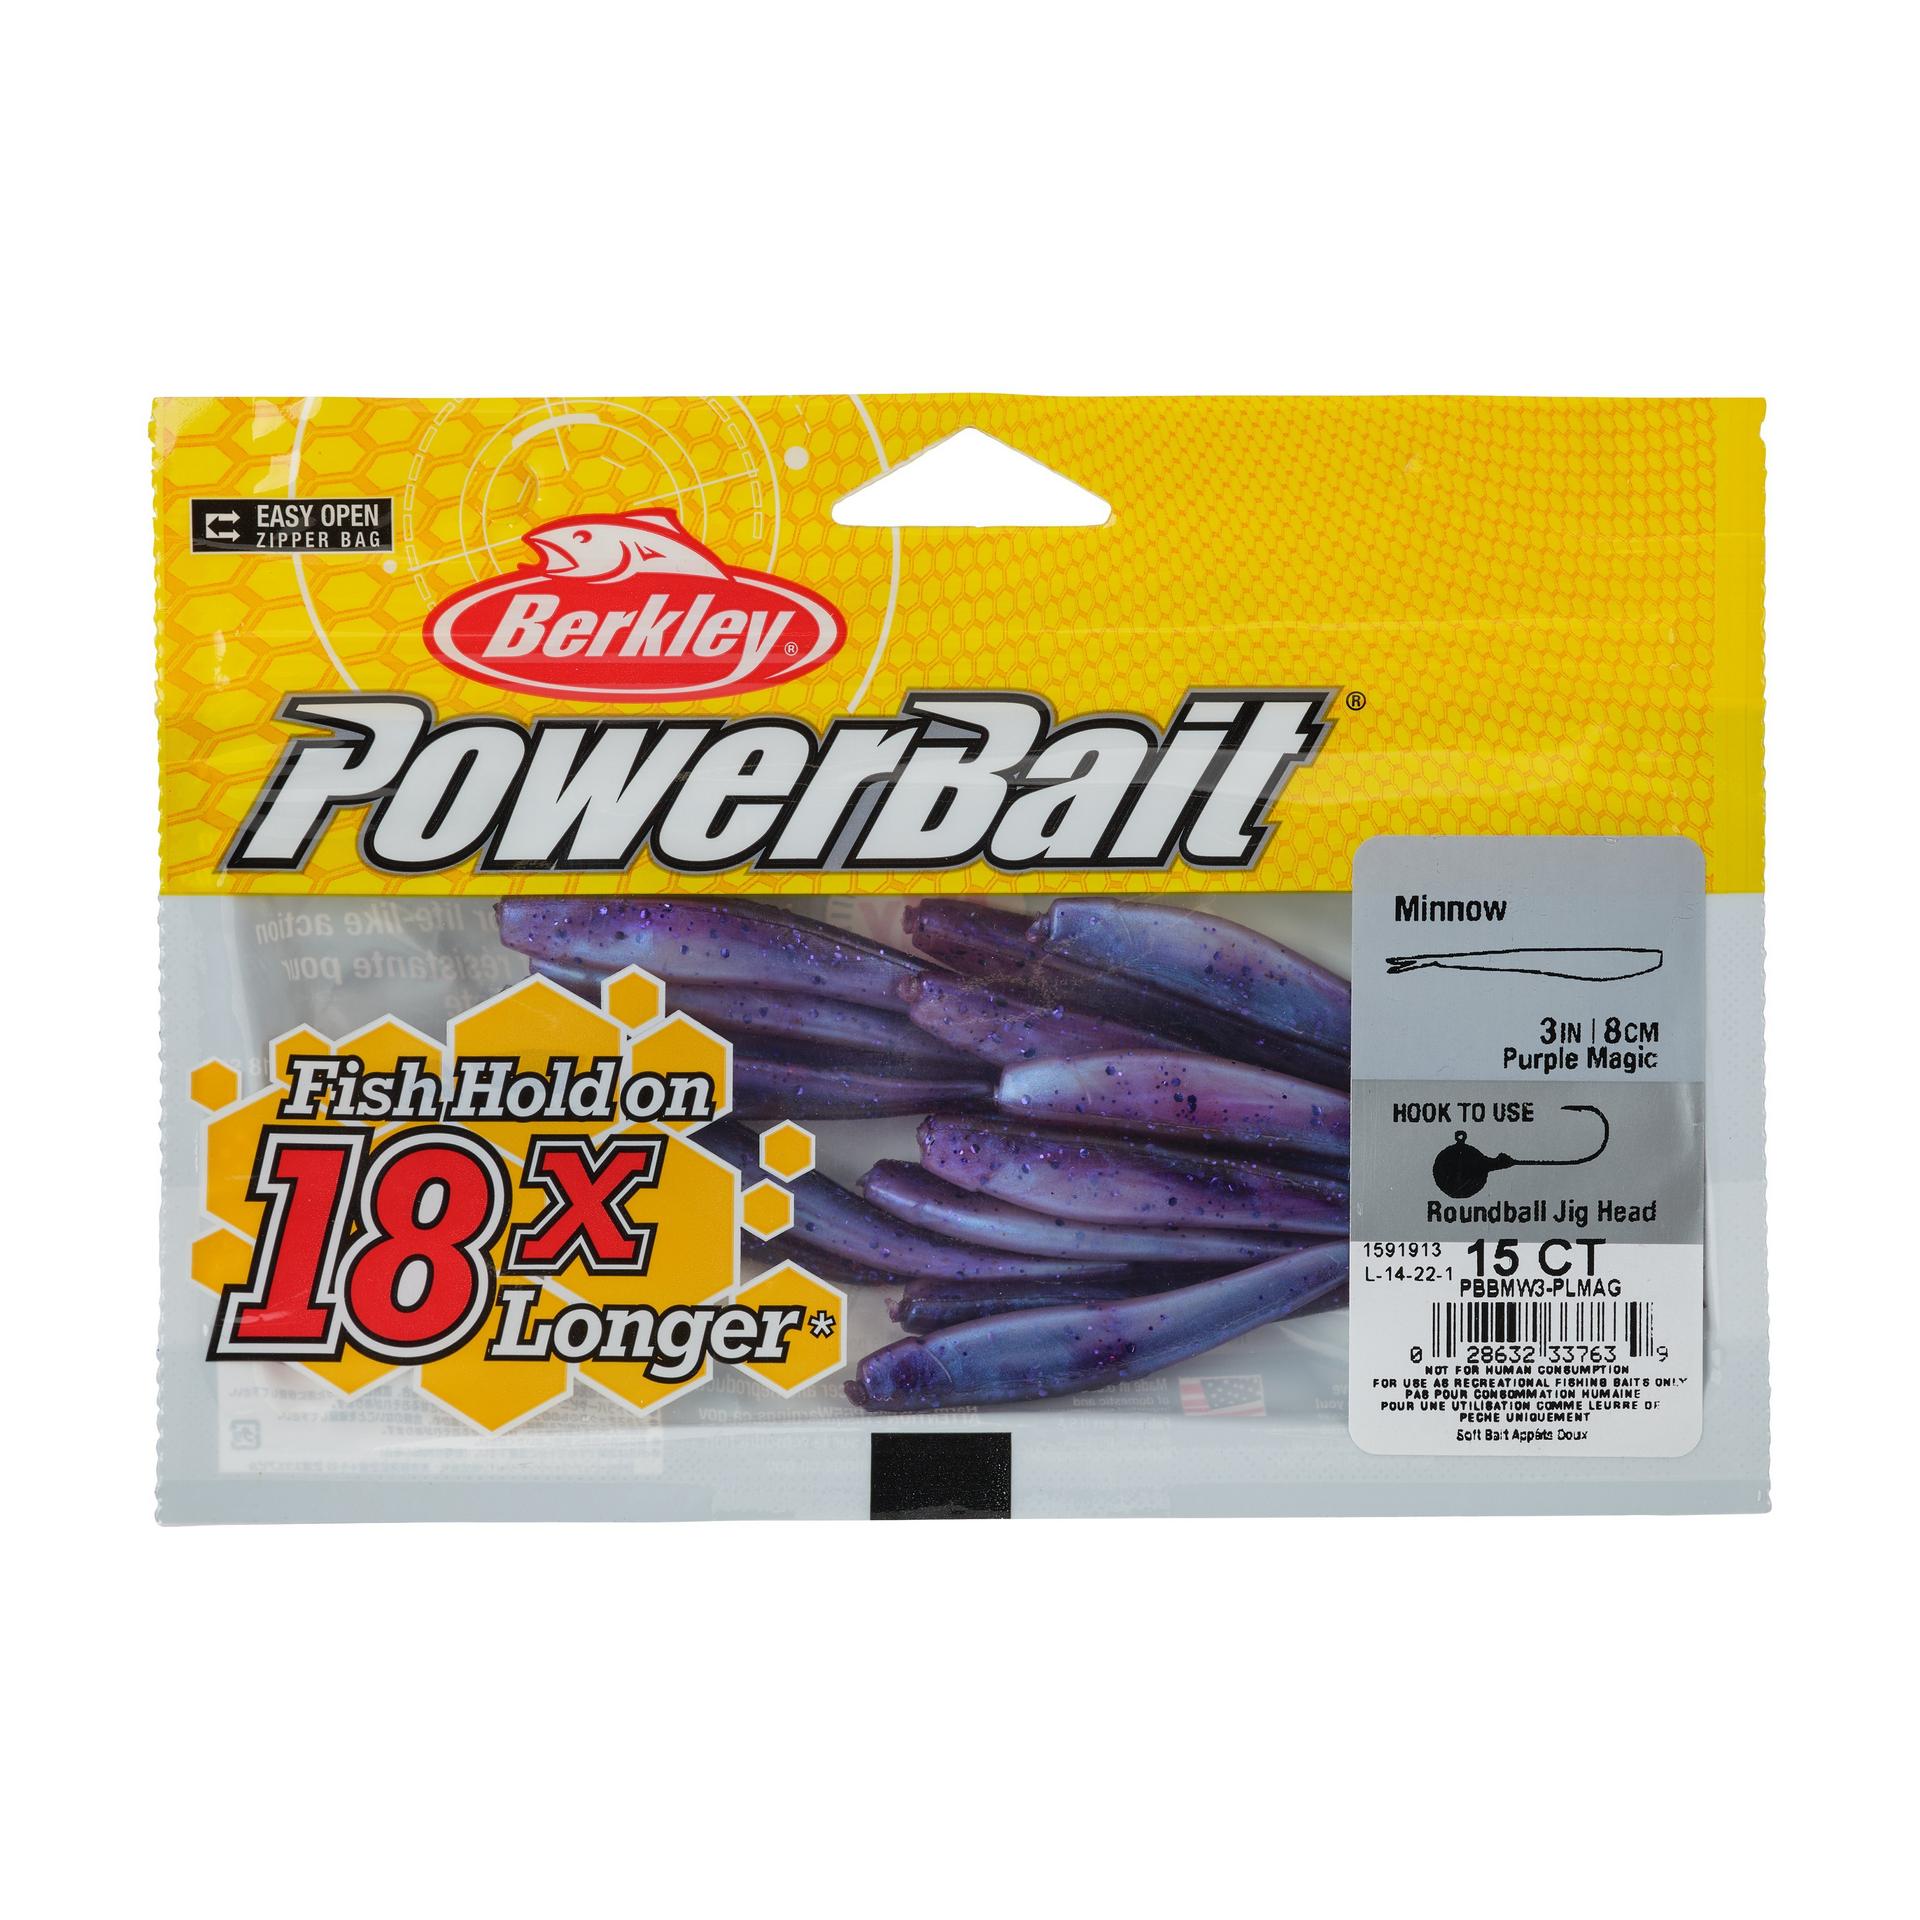 Berkley PowerBaitMinnow PurpleMagic 3in PKG | Berkley Fishing